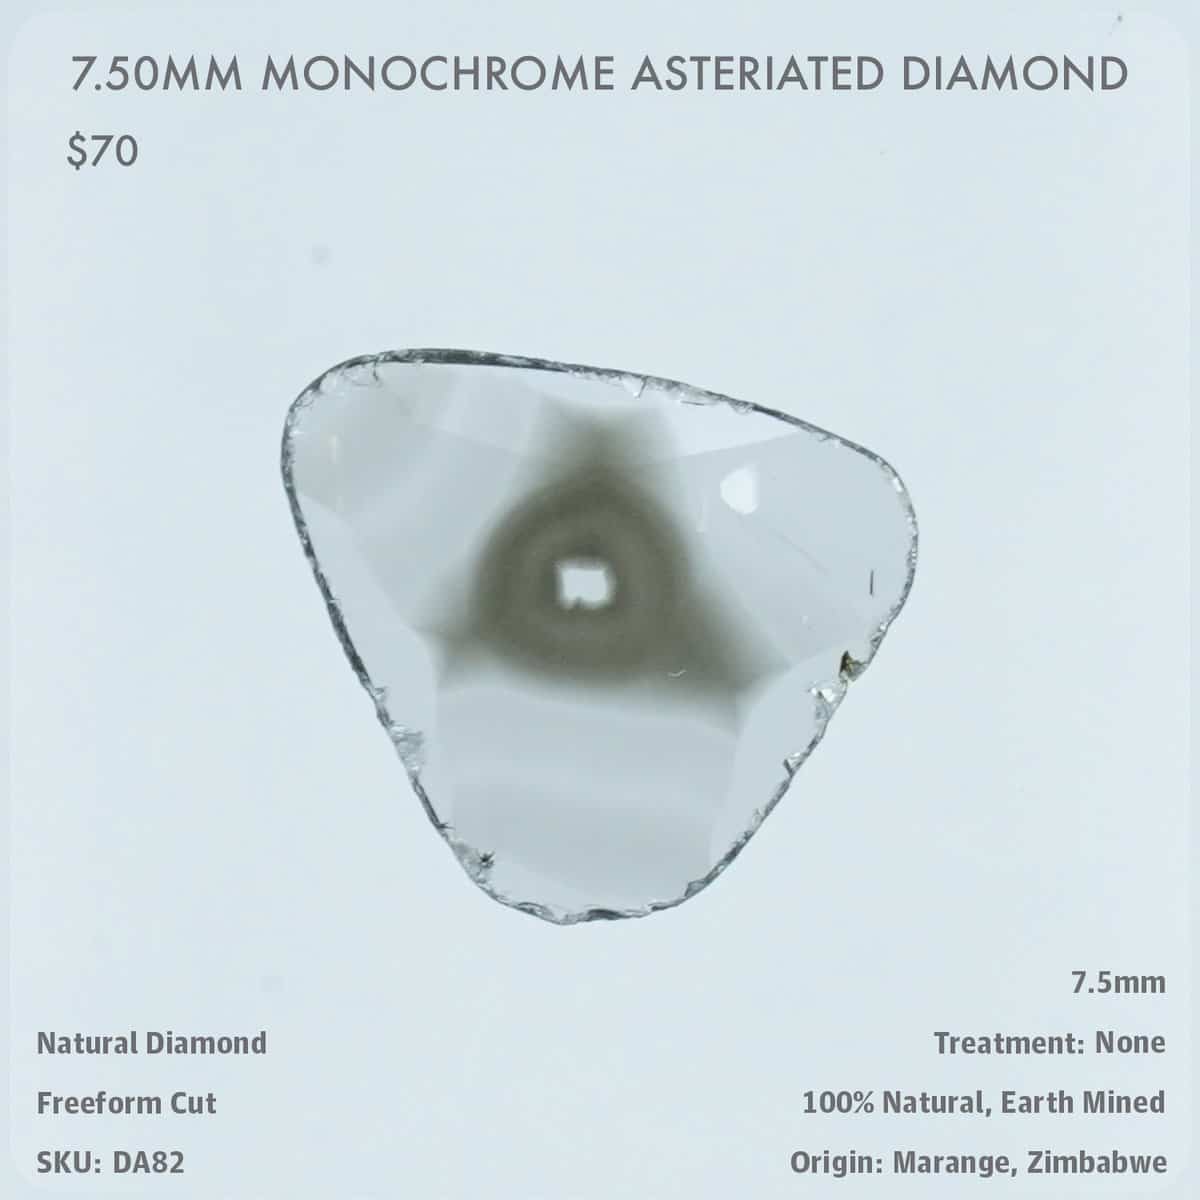 7.50mm Monochrome Asteriated Diamond